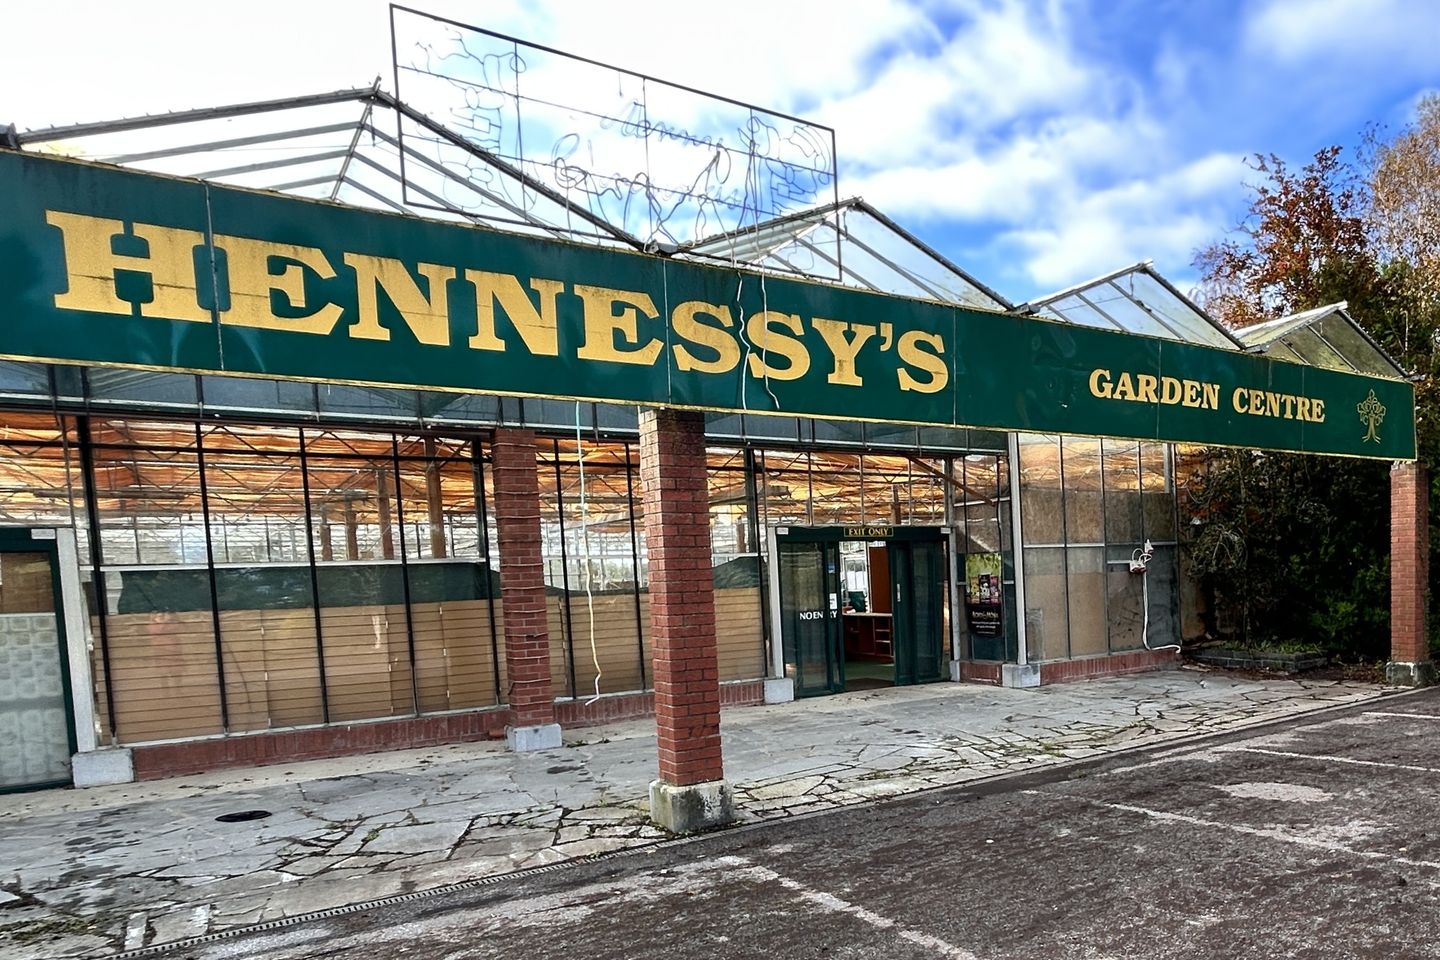 Hennessy's Garden Centre, Carlow Road, Kilkenny, Co. Kilkenny